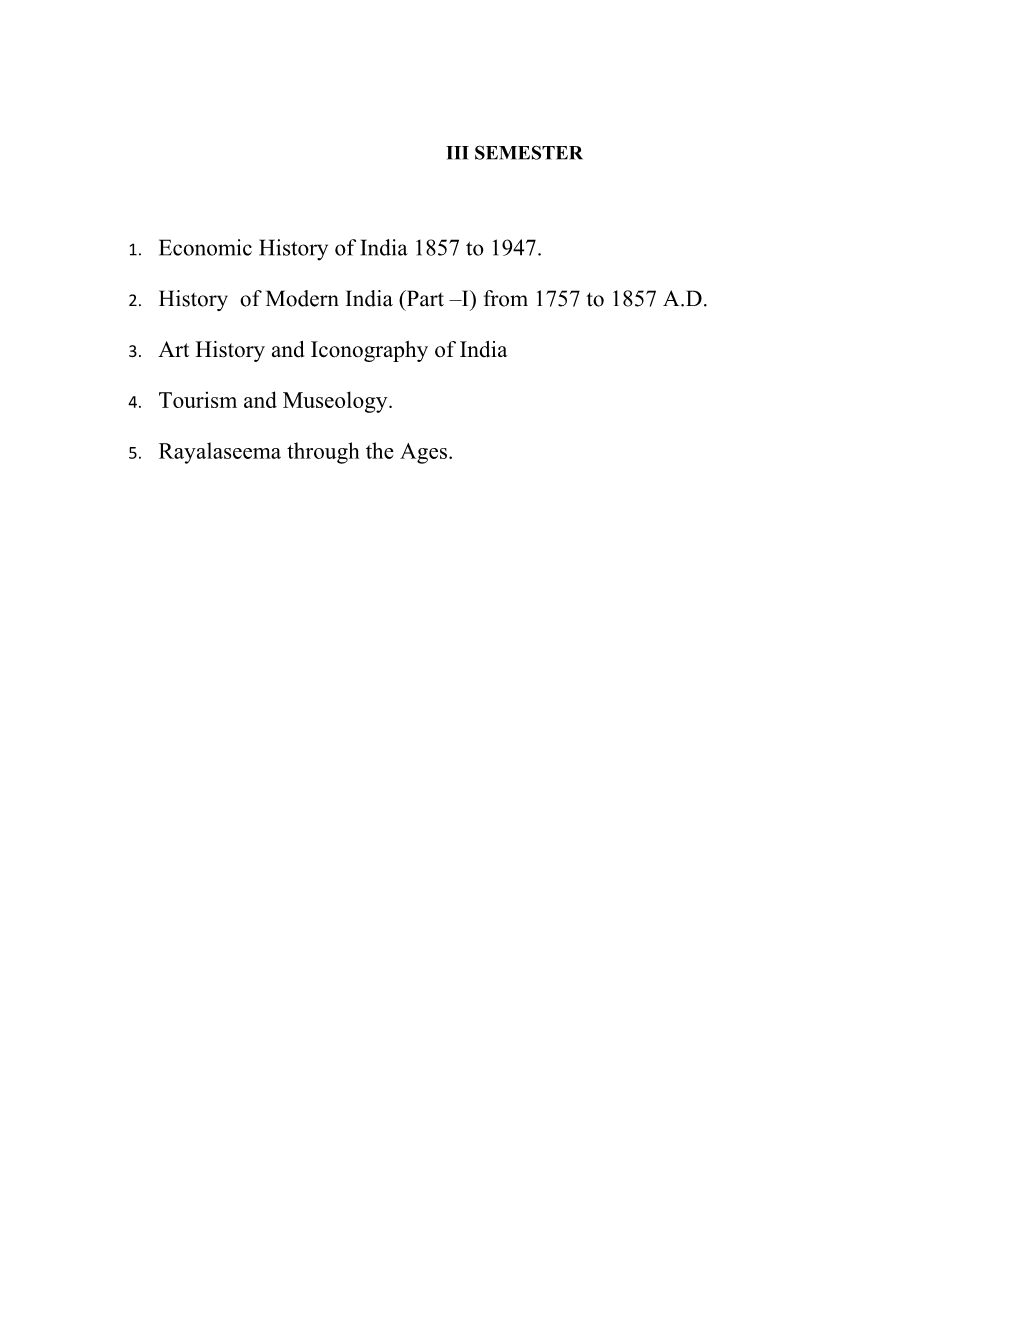 Paper I: Economic History of India 1857 to 1947